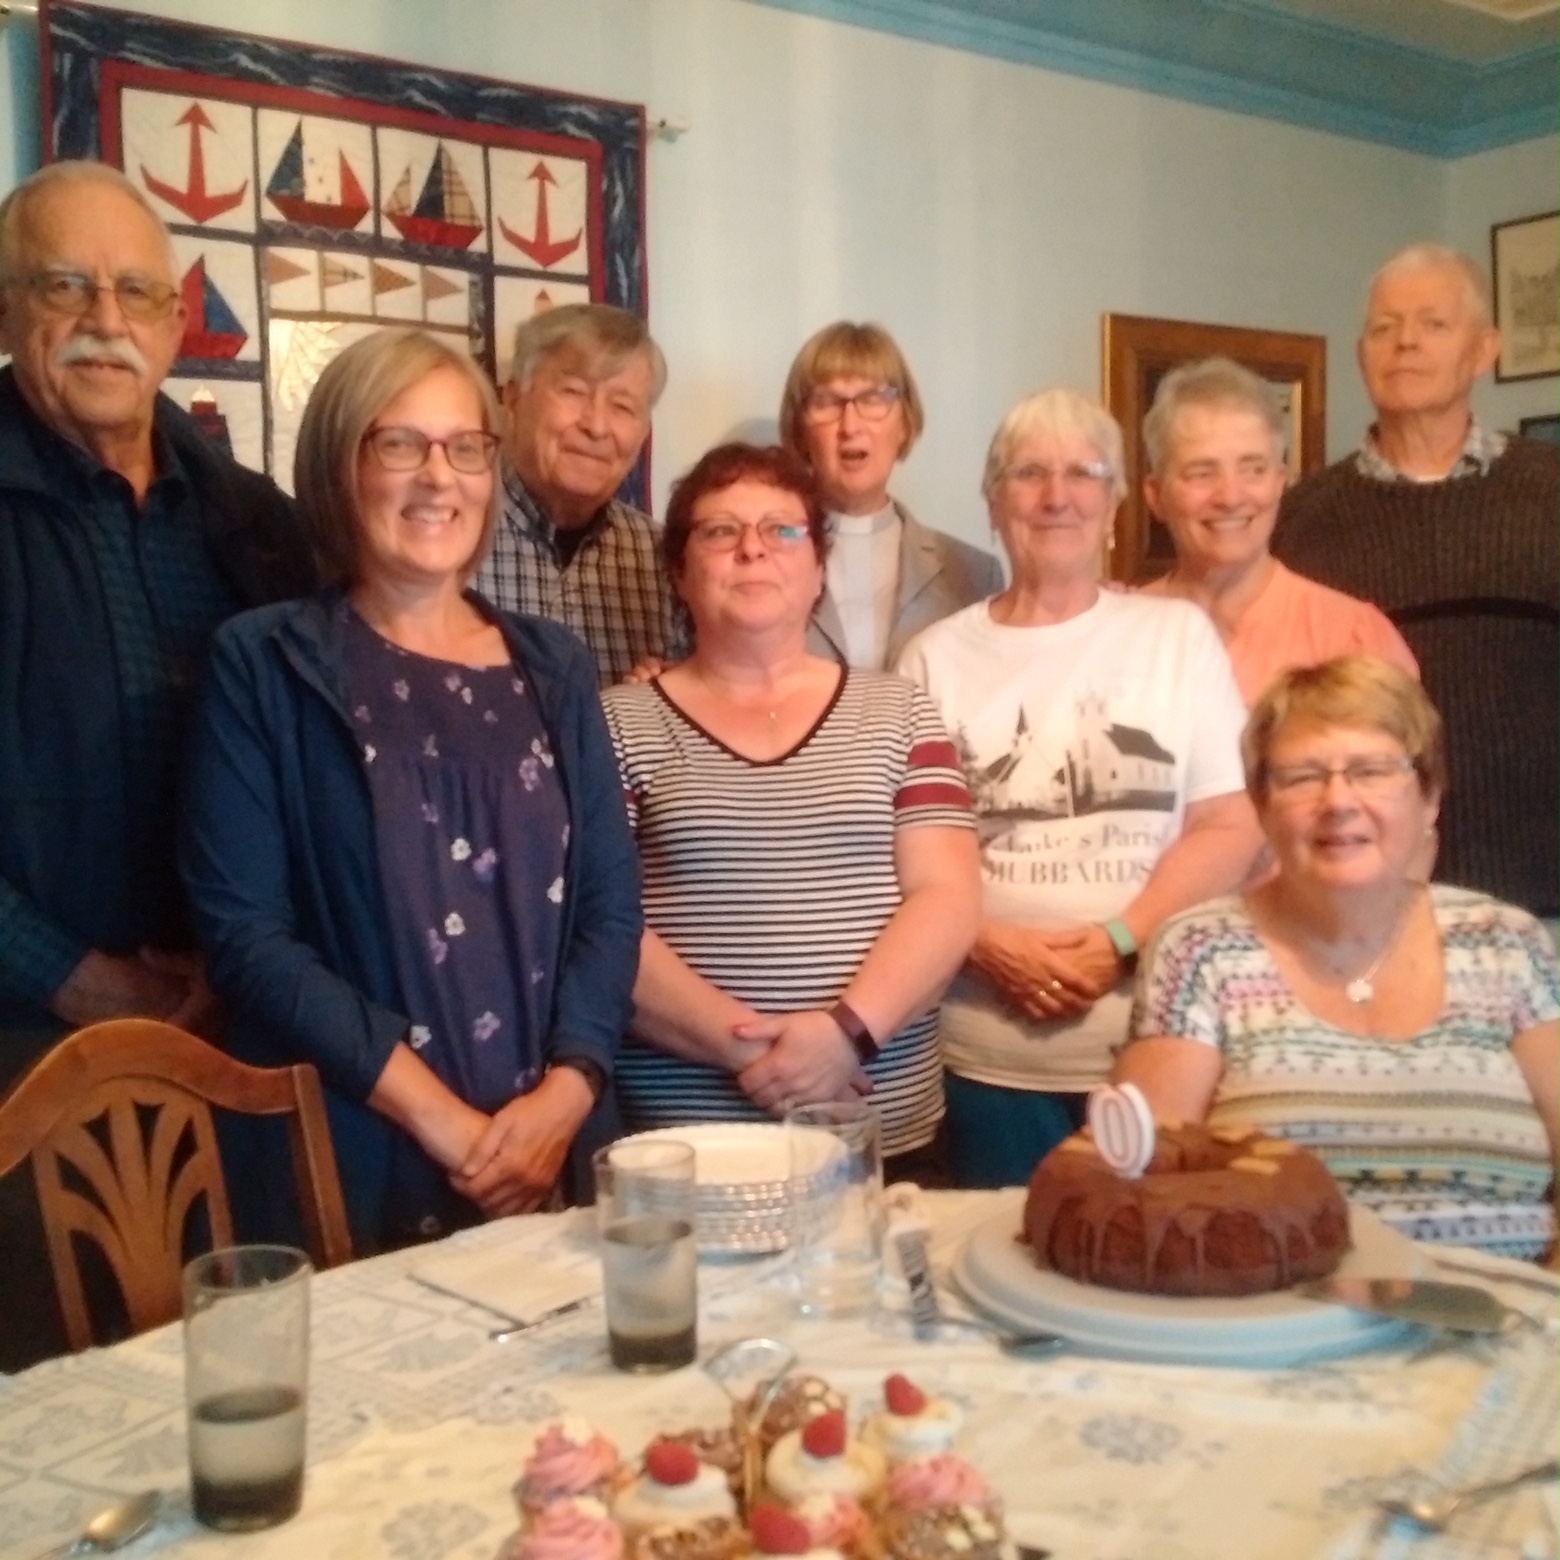 Parish lay ministry team potluck at Brenda's in September (And also Brenda's birthday).